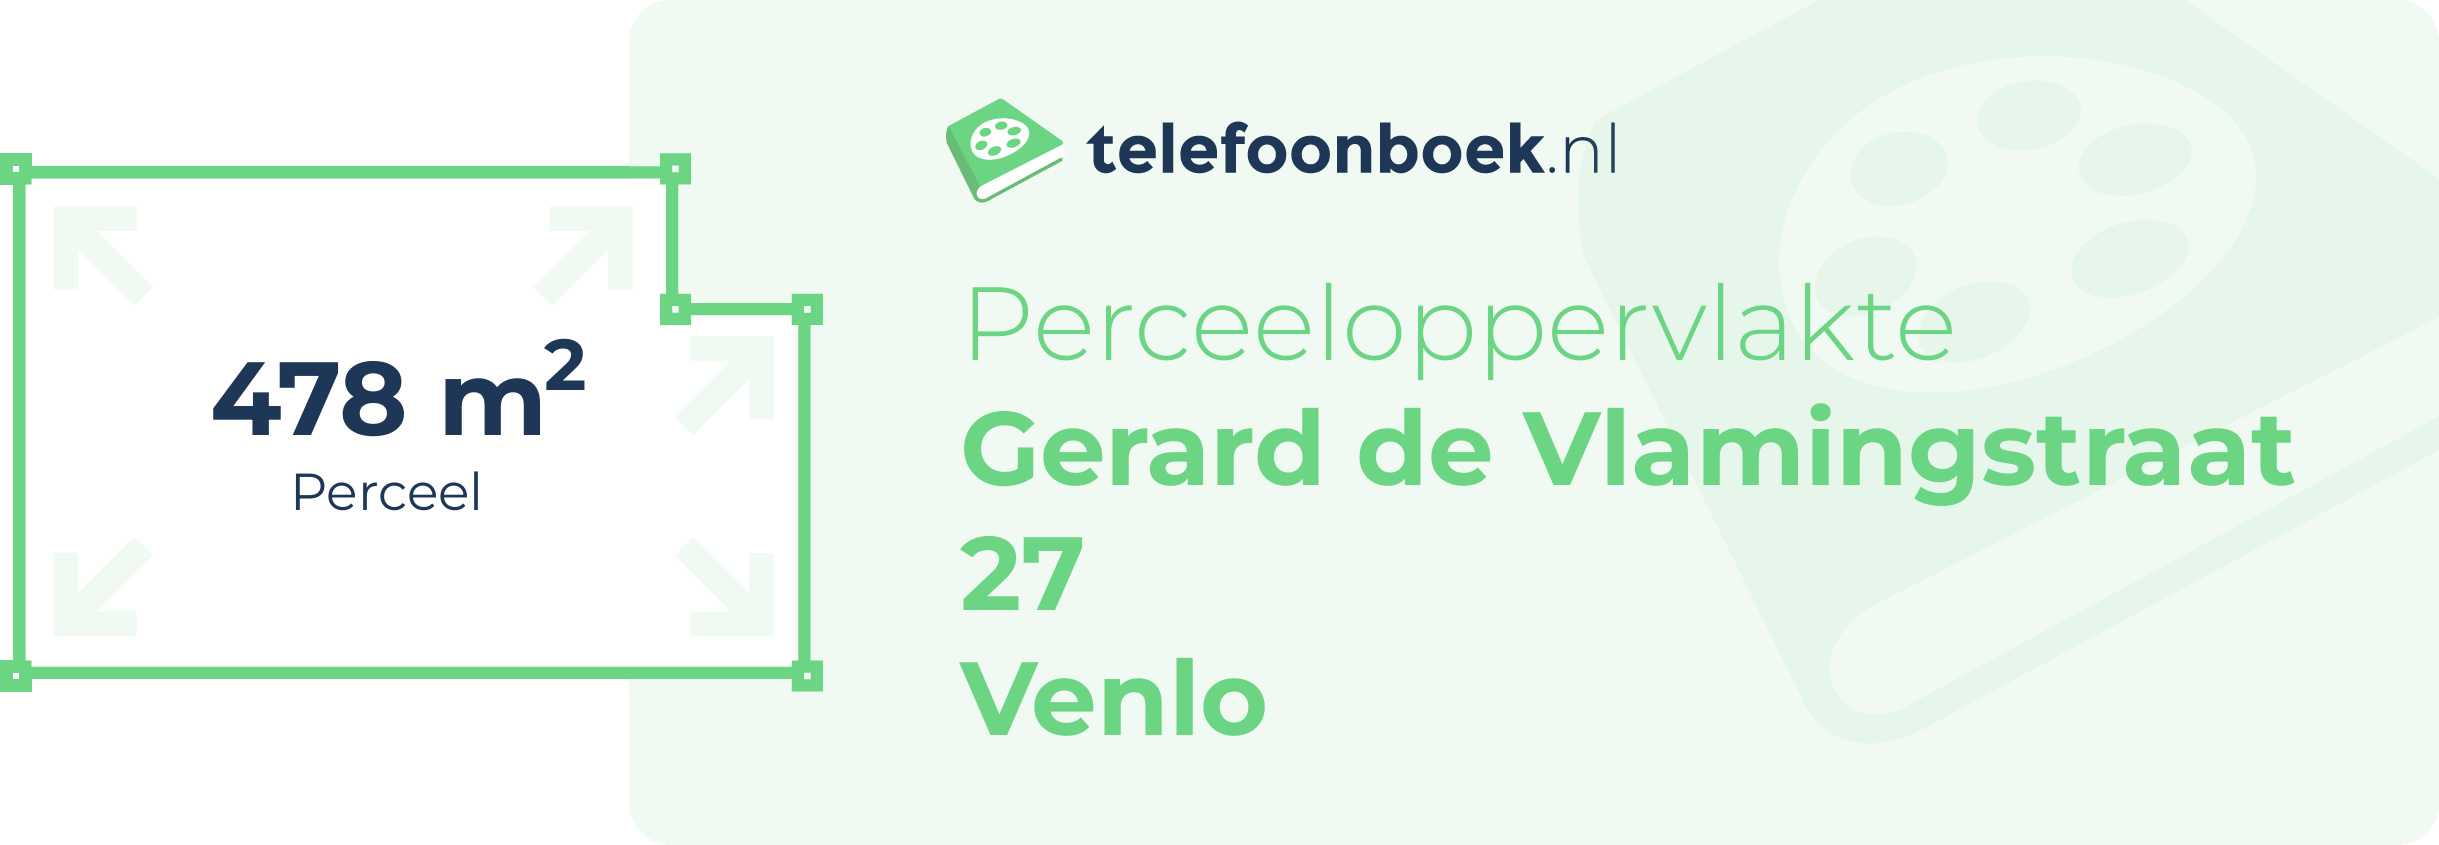 Perceeloppervlakte Gerard De Vlamingstraat 27 Venlo